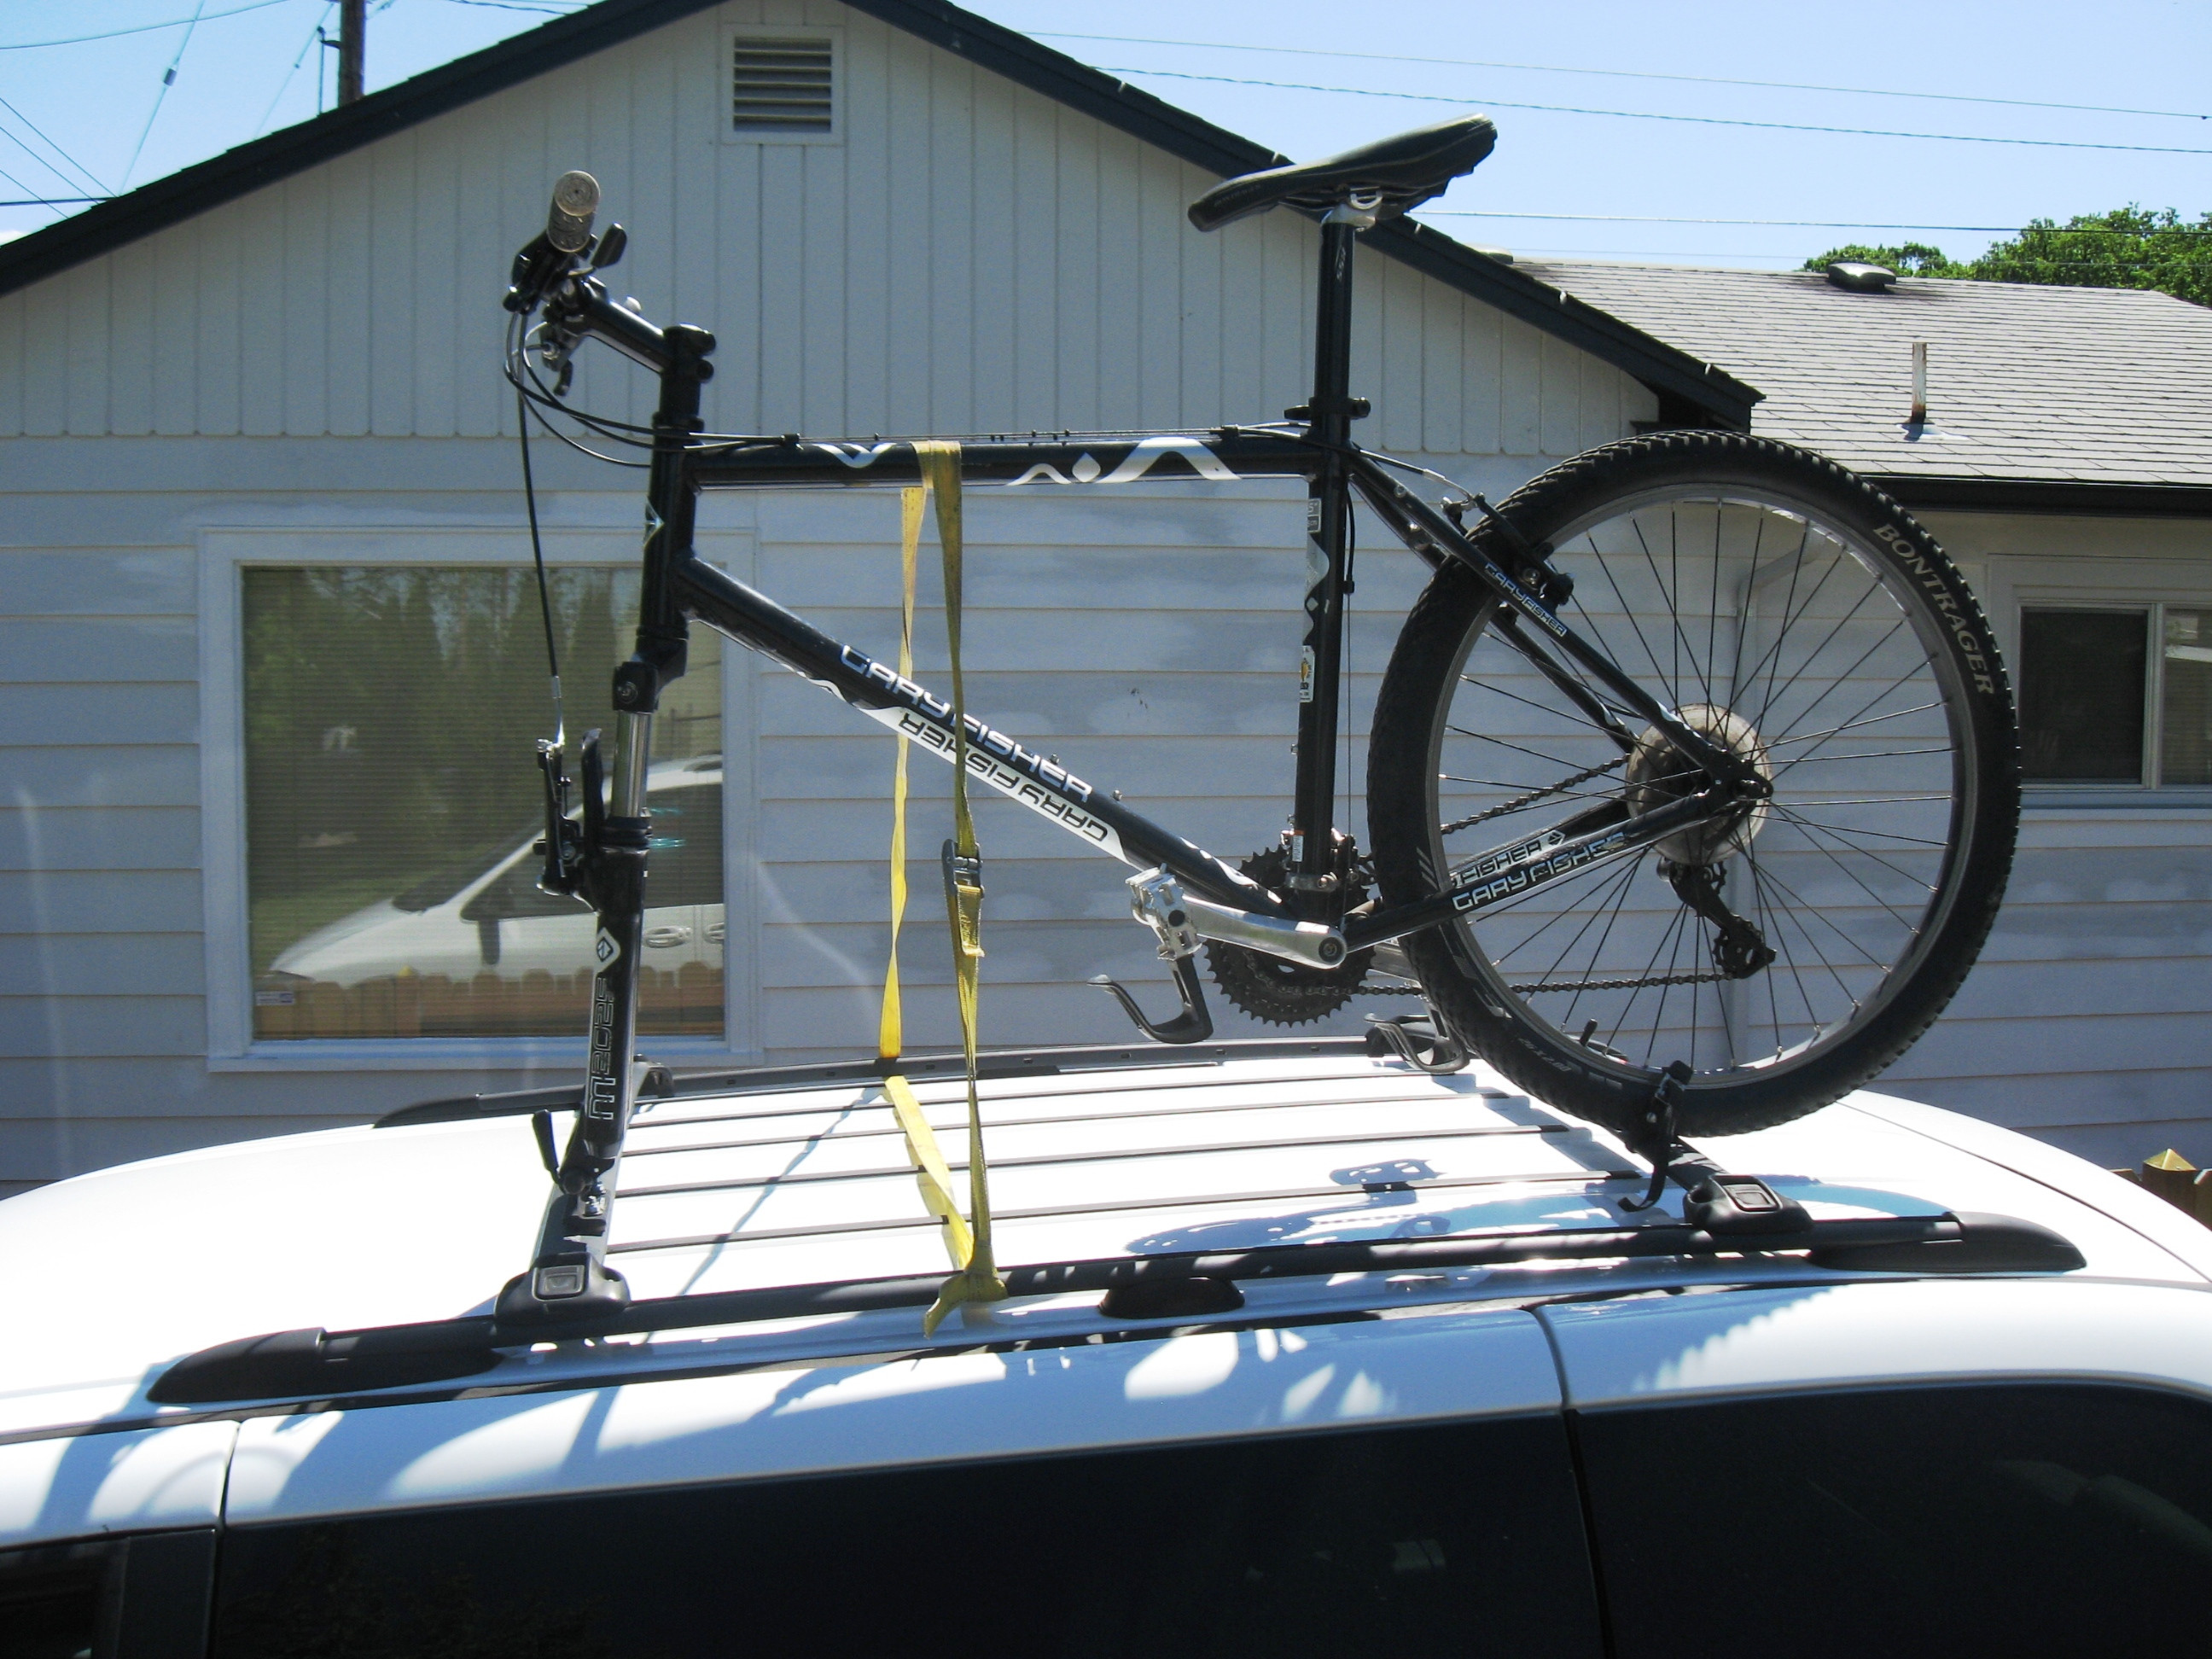 Best ideas about DIY Bike Rack
. Save or Pin DiY Bike Racks Singletracks Mountain Bike News Now.